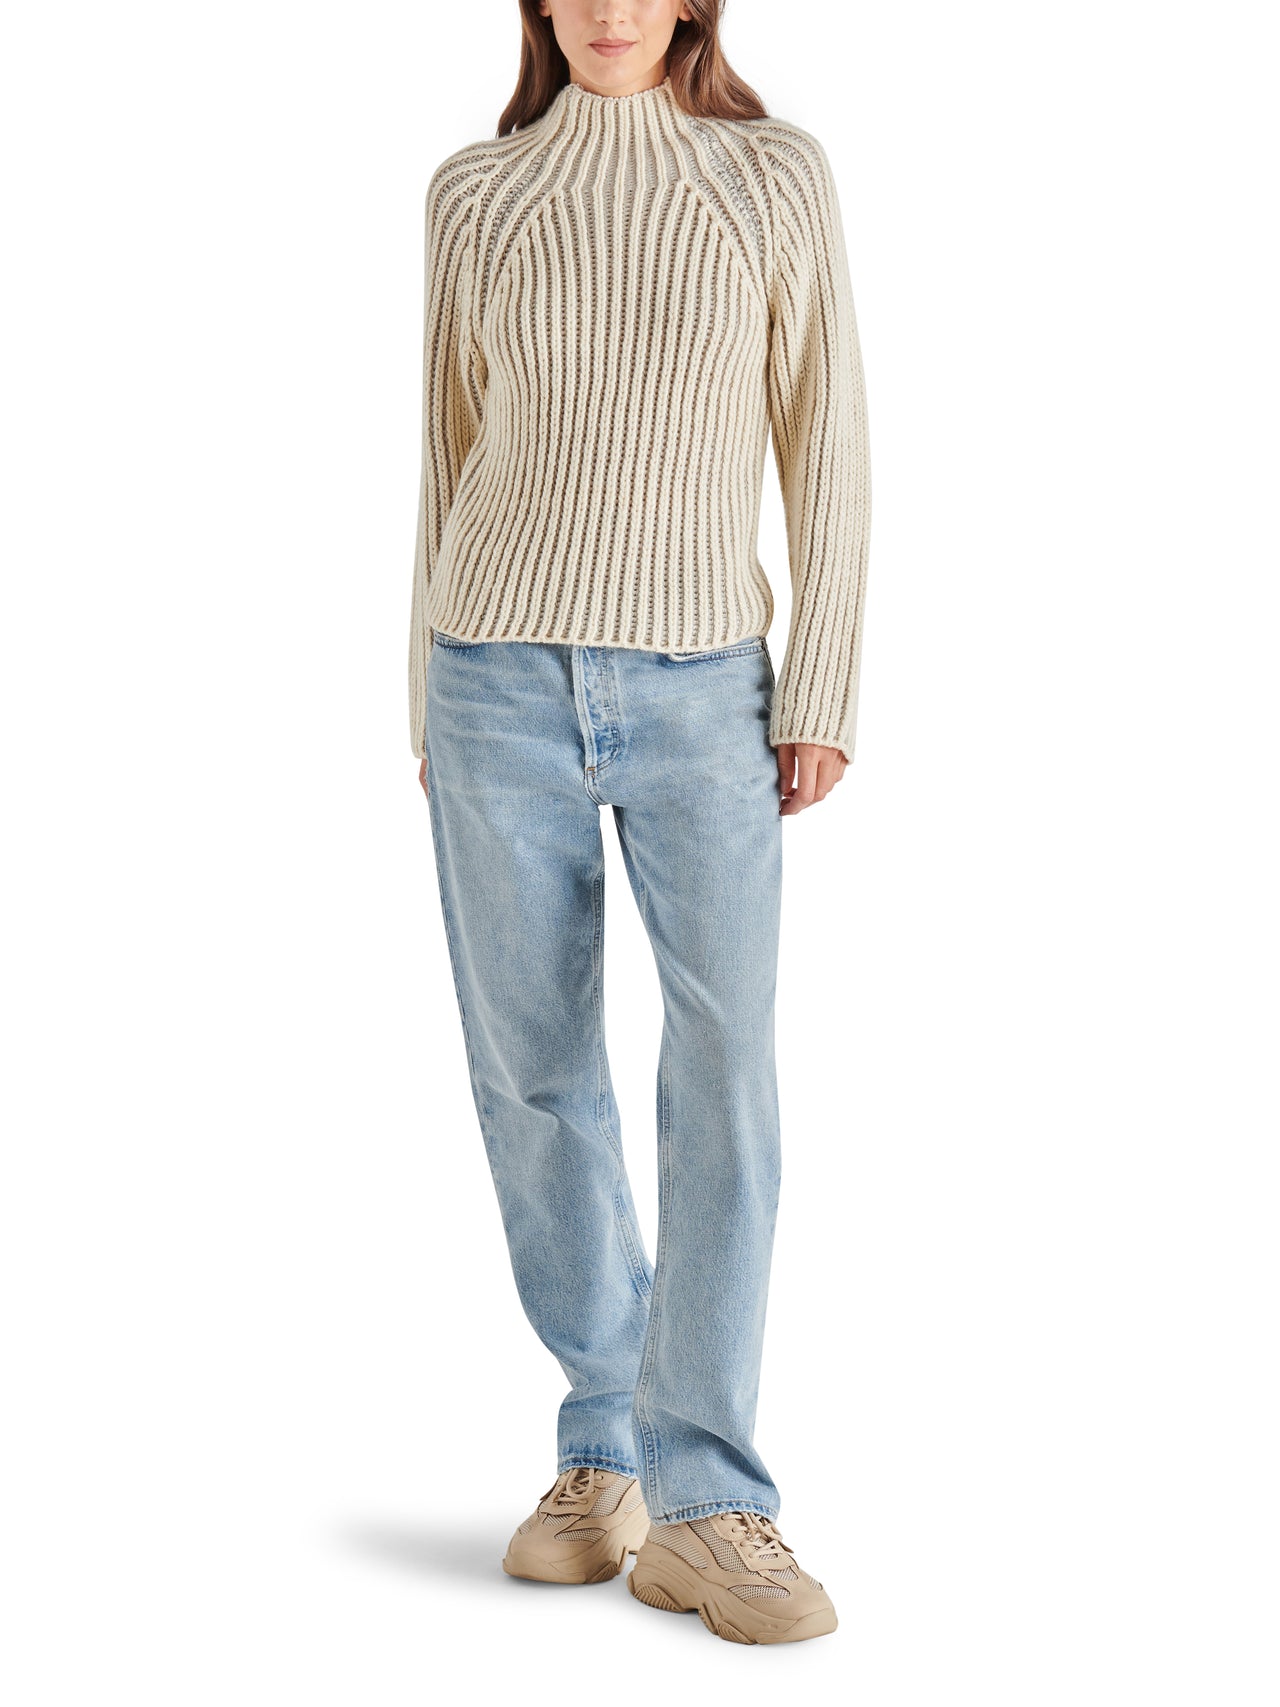 Terra Sweater Ash Grey,  by Steve Madden | LIT Boutique